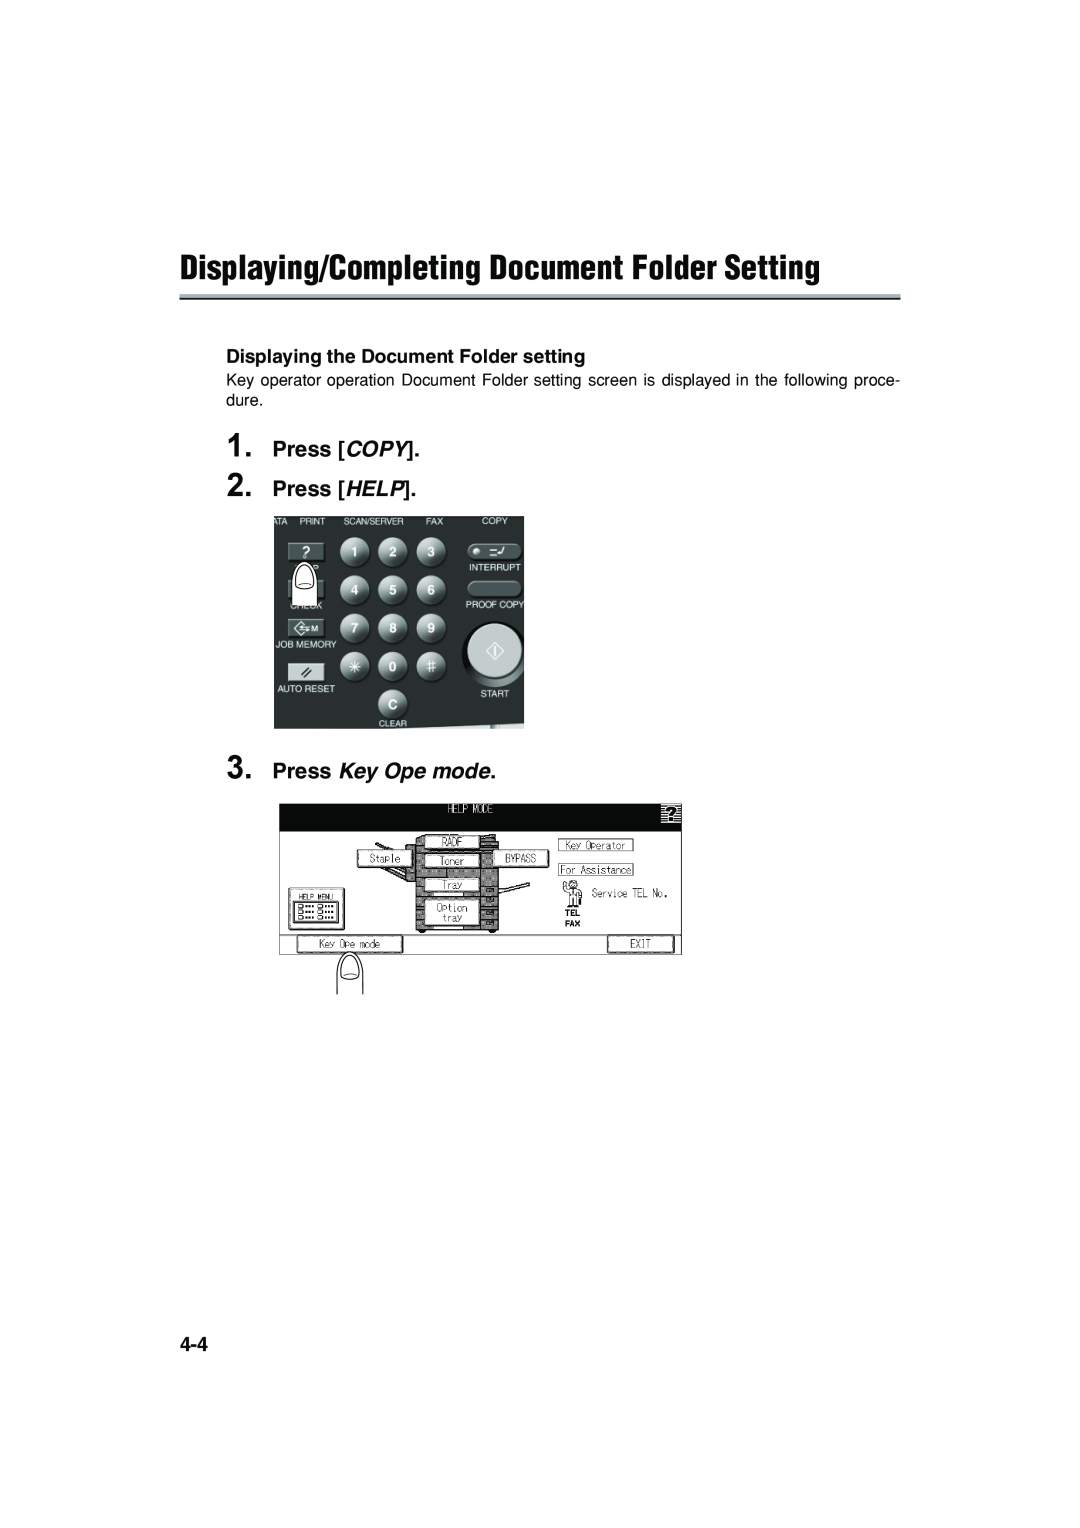 Konica Minolta 7222 manual Displaying/Completing Document Folder Setting, Press COPY. Press HELP, Press Key Ope mode 